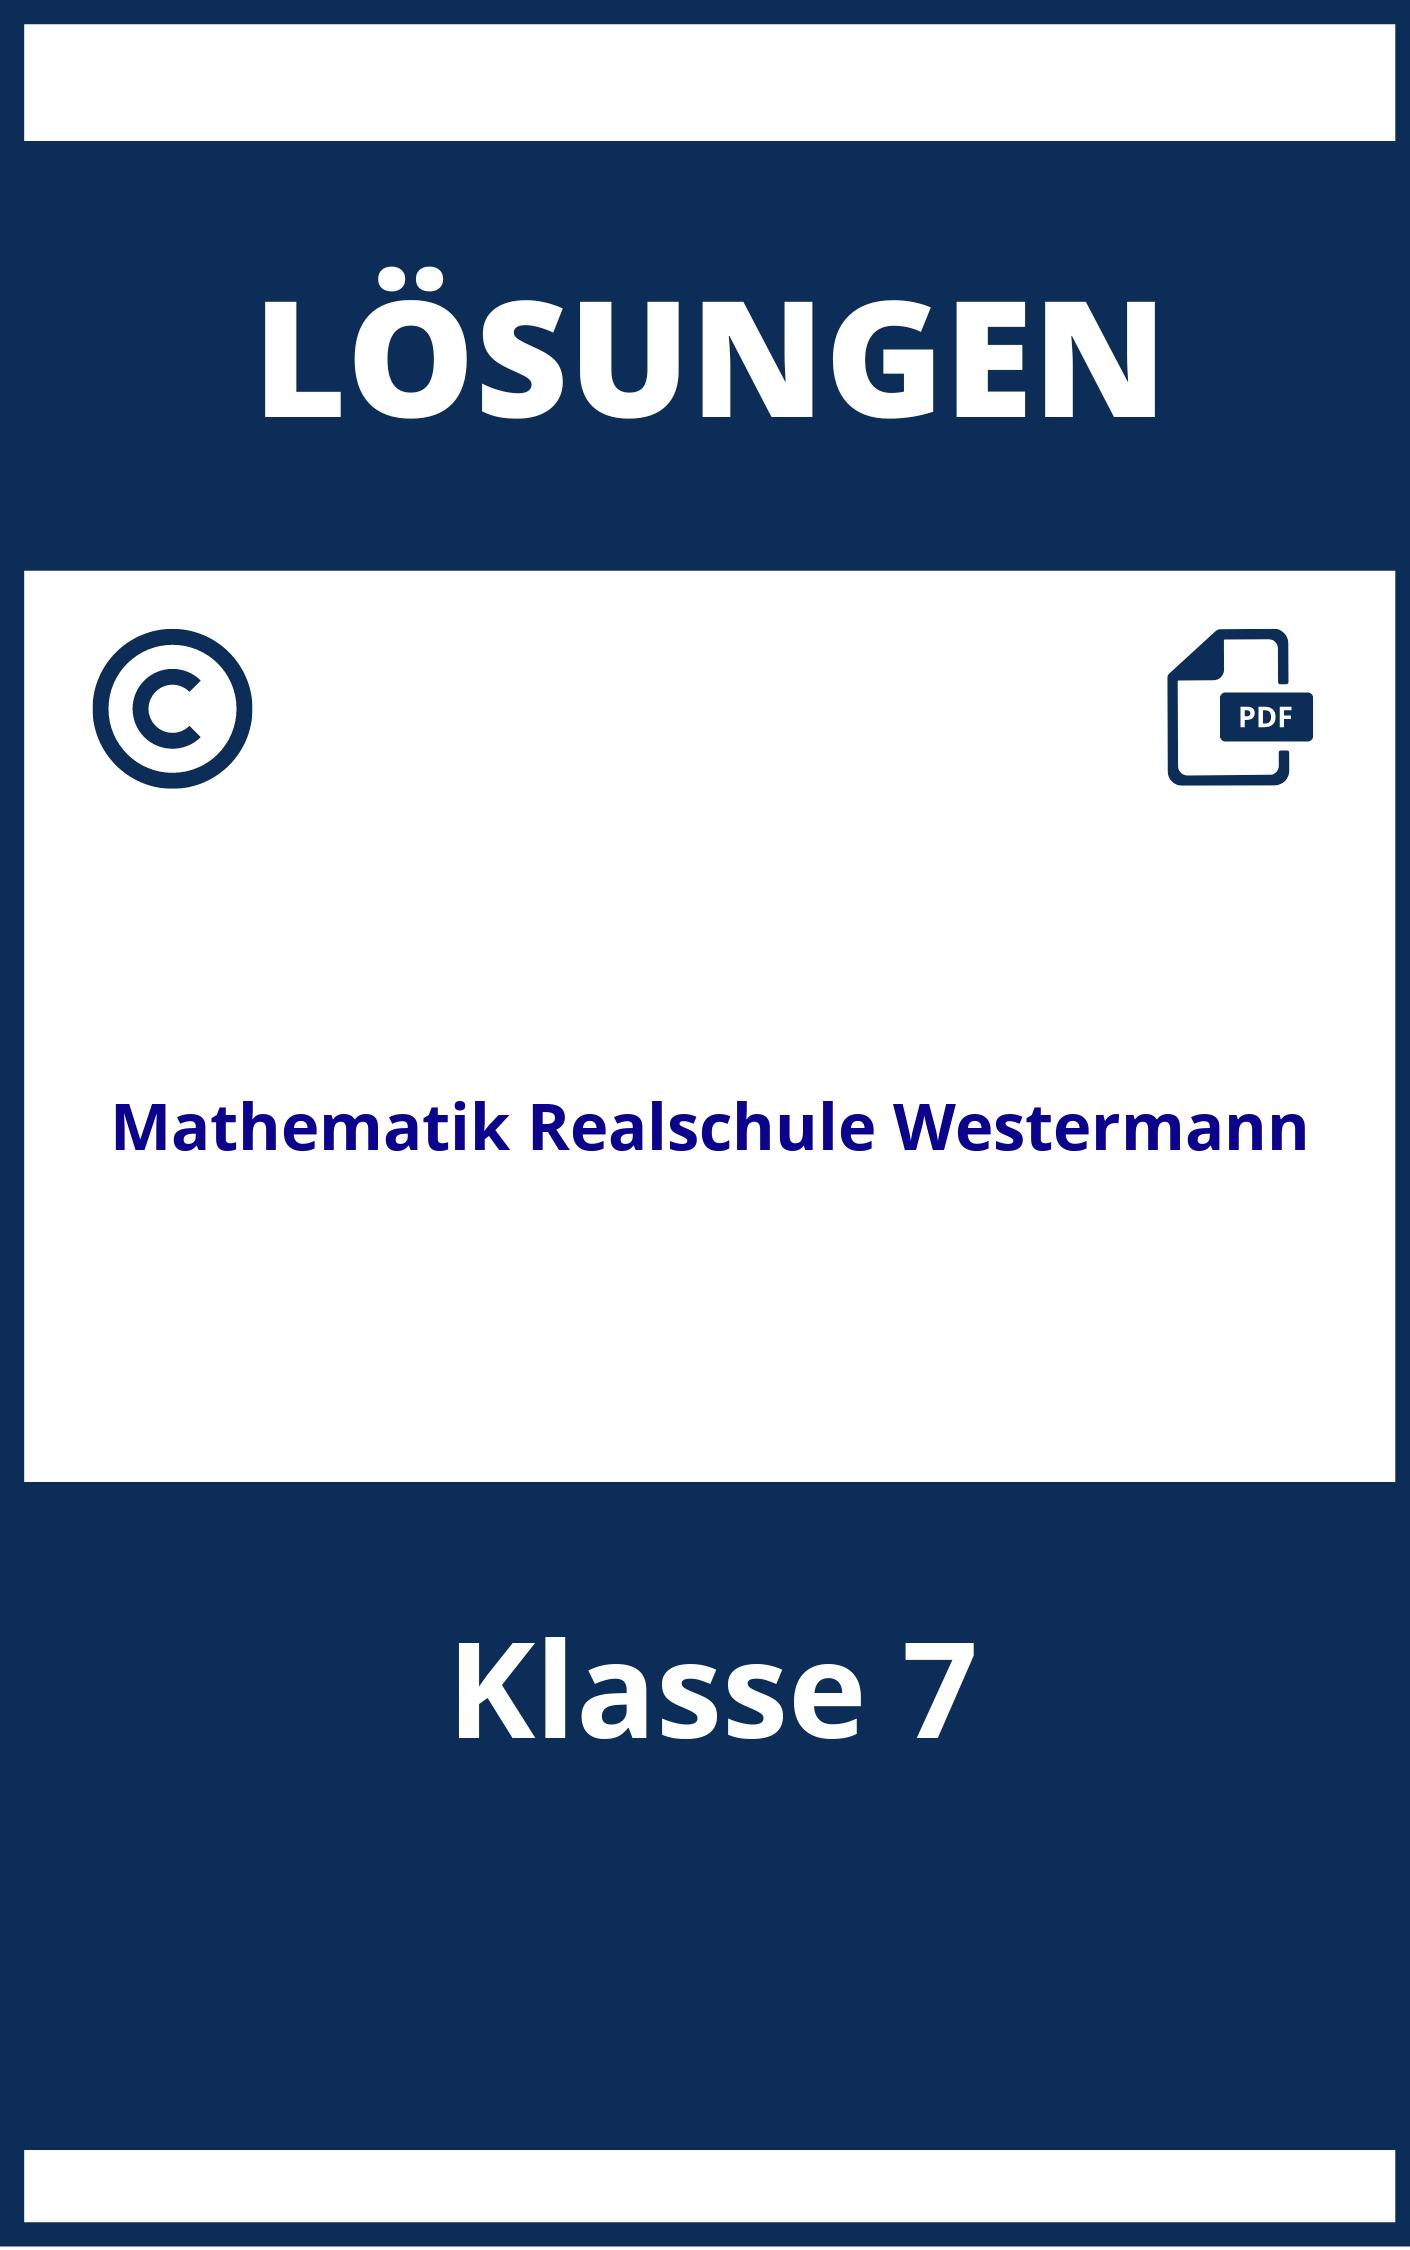 Mathematik 7 Klasse Realschule Westermann Lösungen